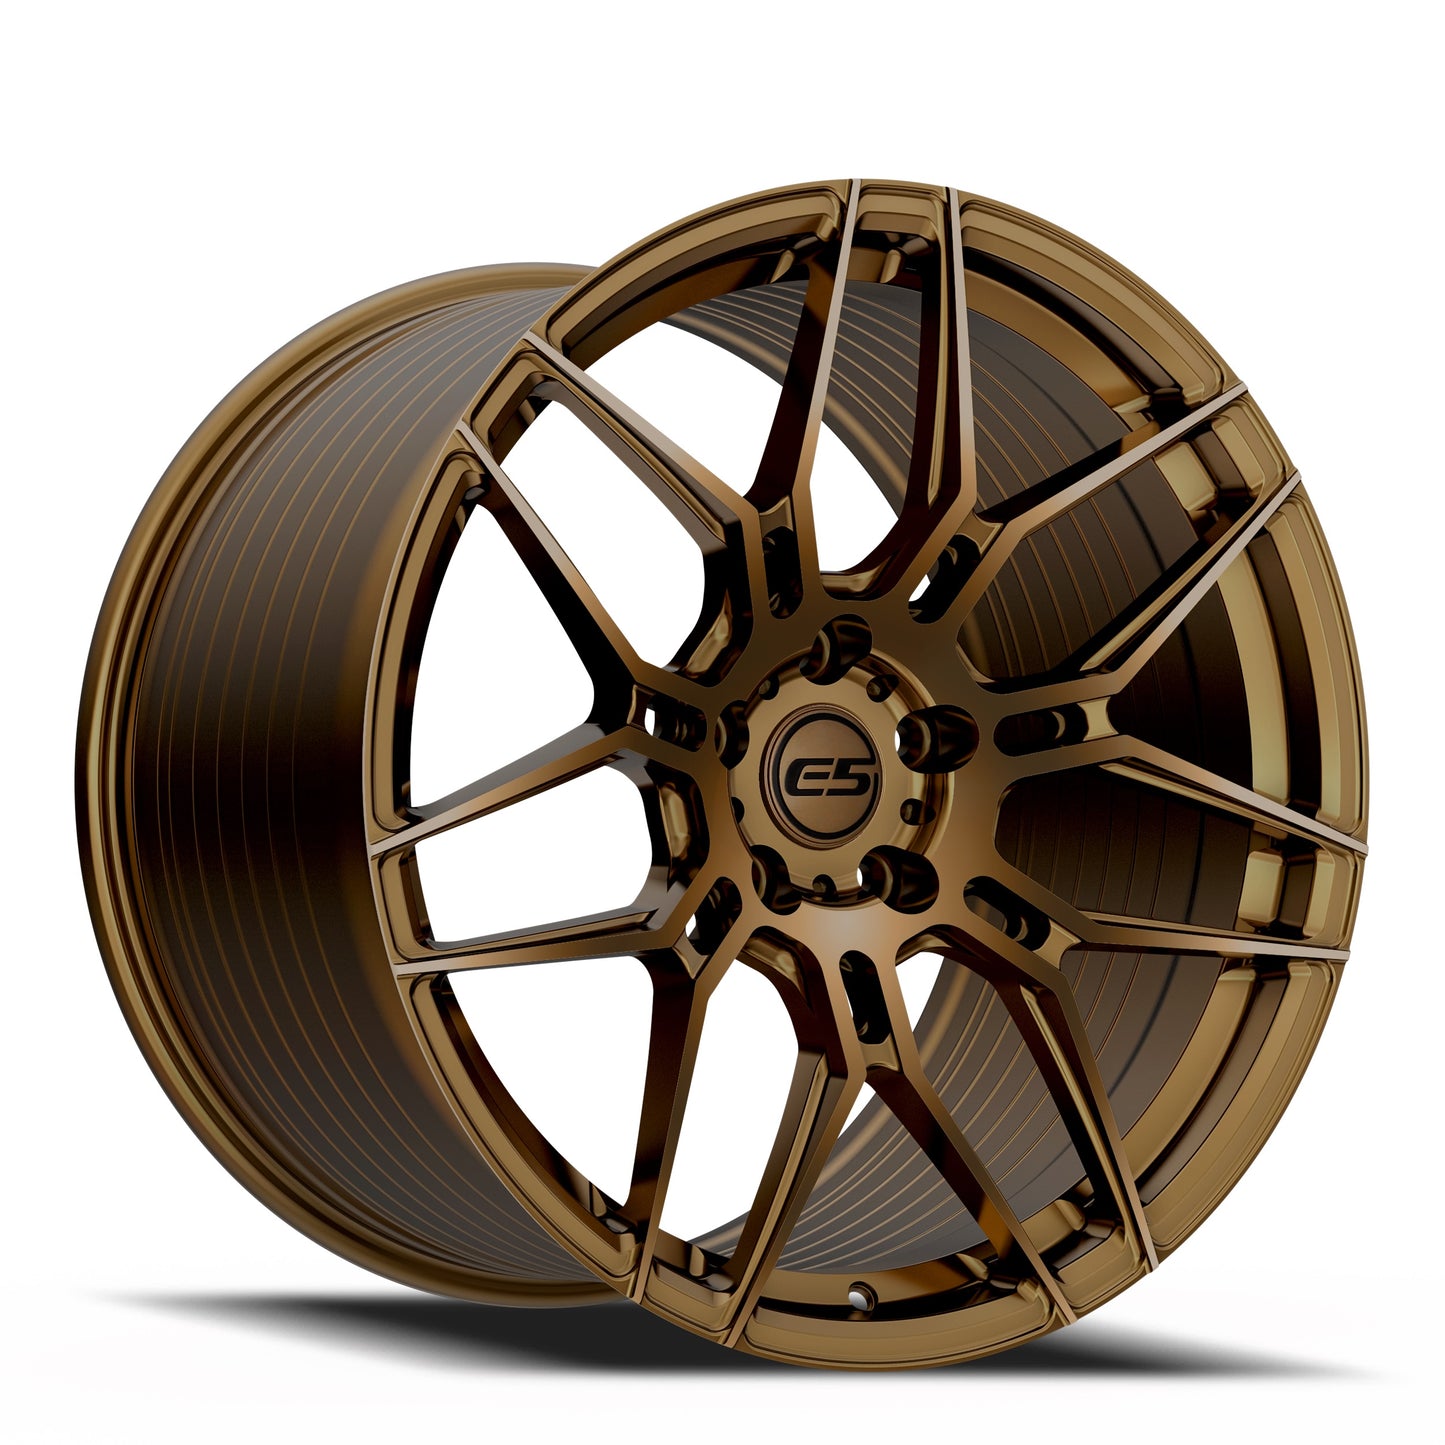 C8 Corvette E5 Speedway Wheel - Dark Bronze